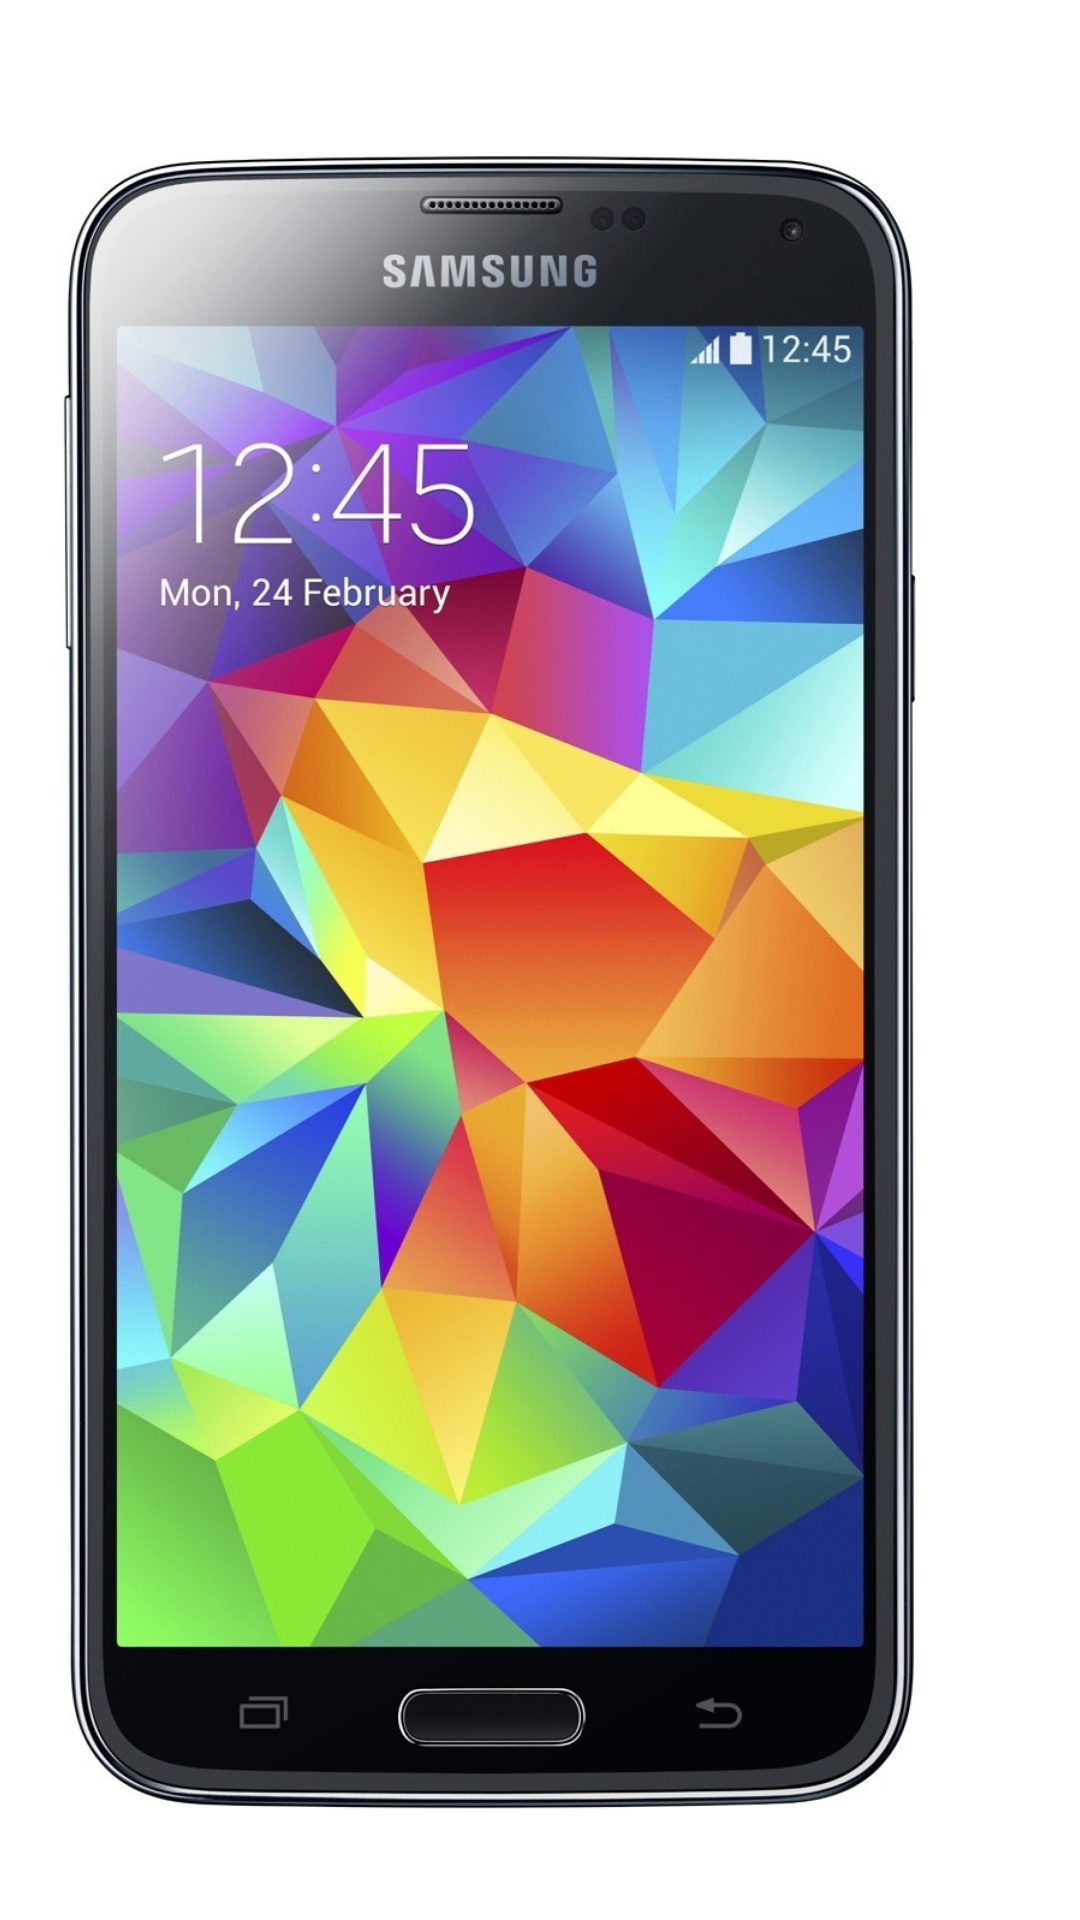 Samsung Galaxy S5 and LG Nexus wallpaper 1080x1920